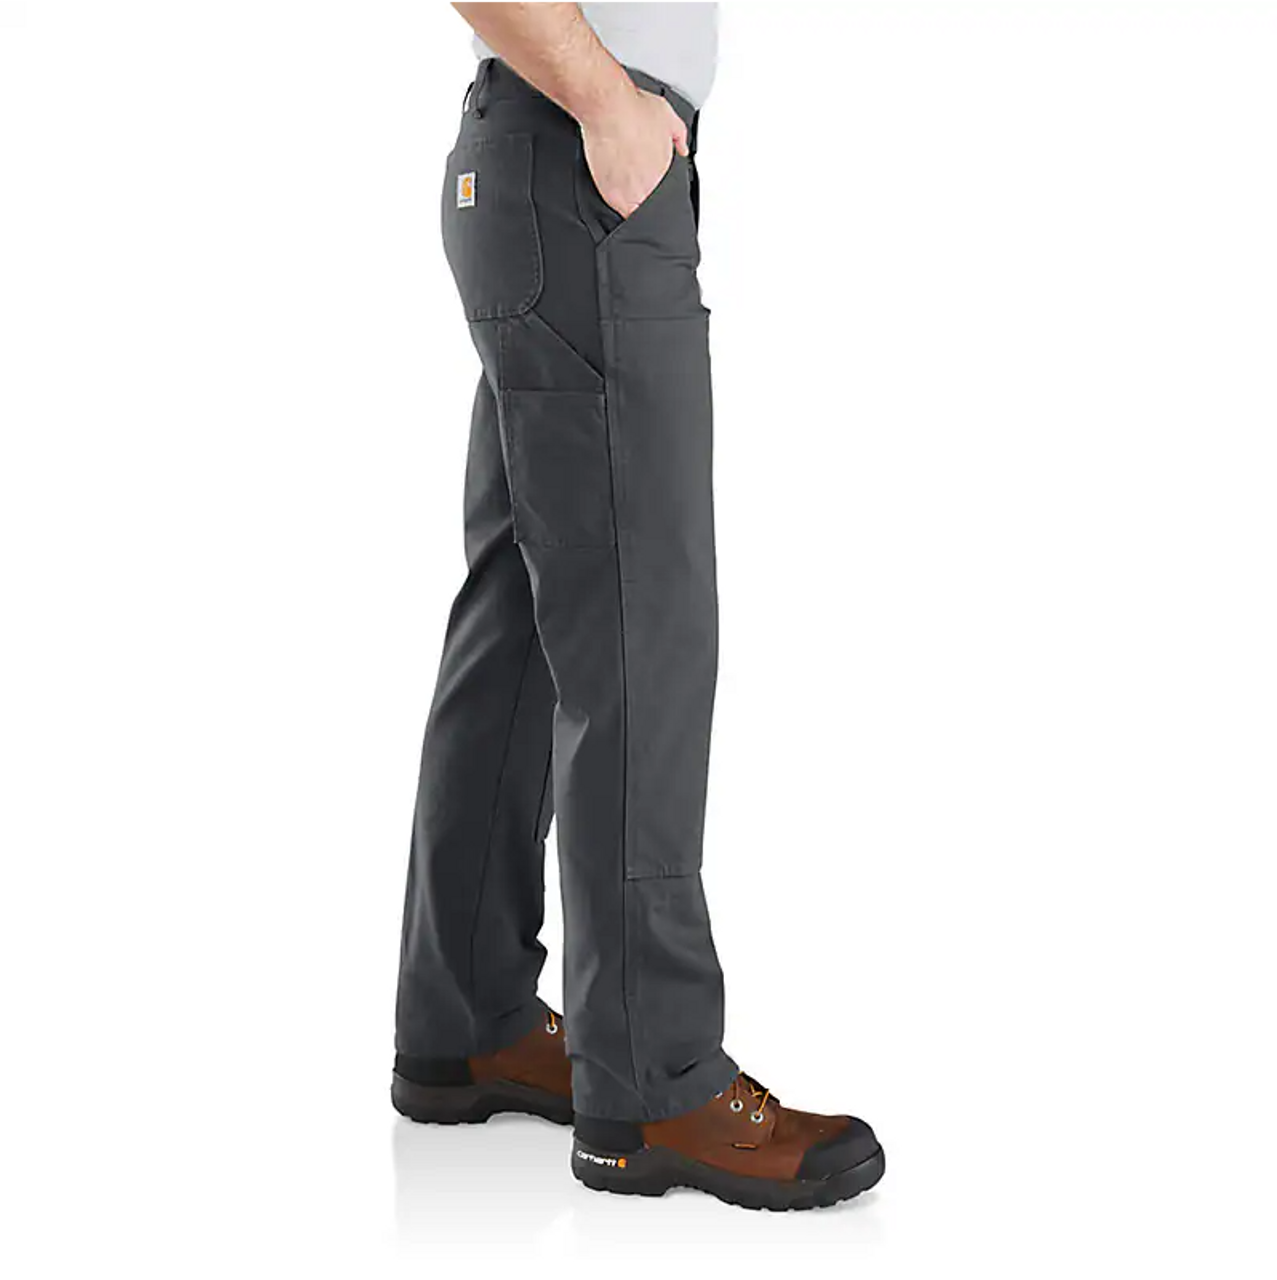 Carhartt Men's Rugged Flex Rigby Double-Front Pants - Straight Leg